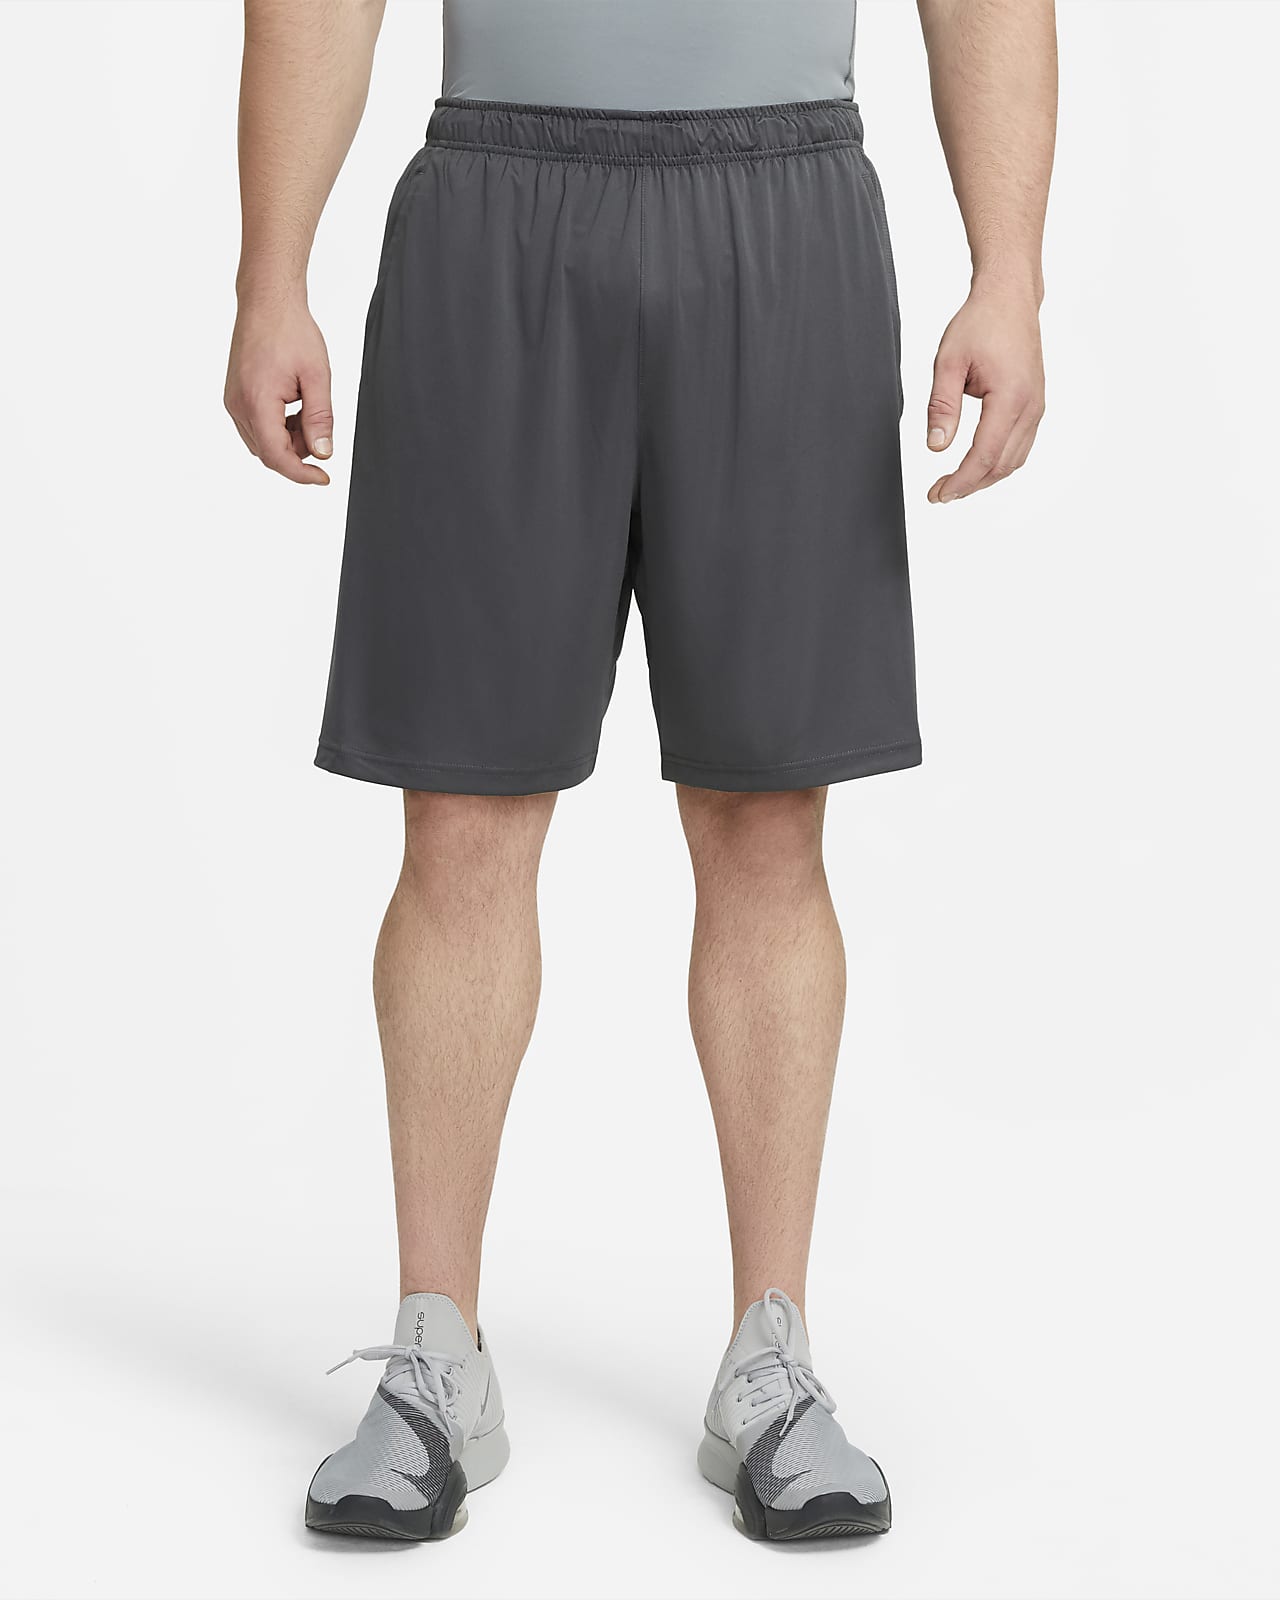 nike men's 9 inch shorts